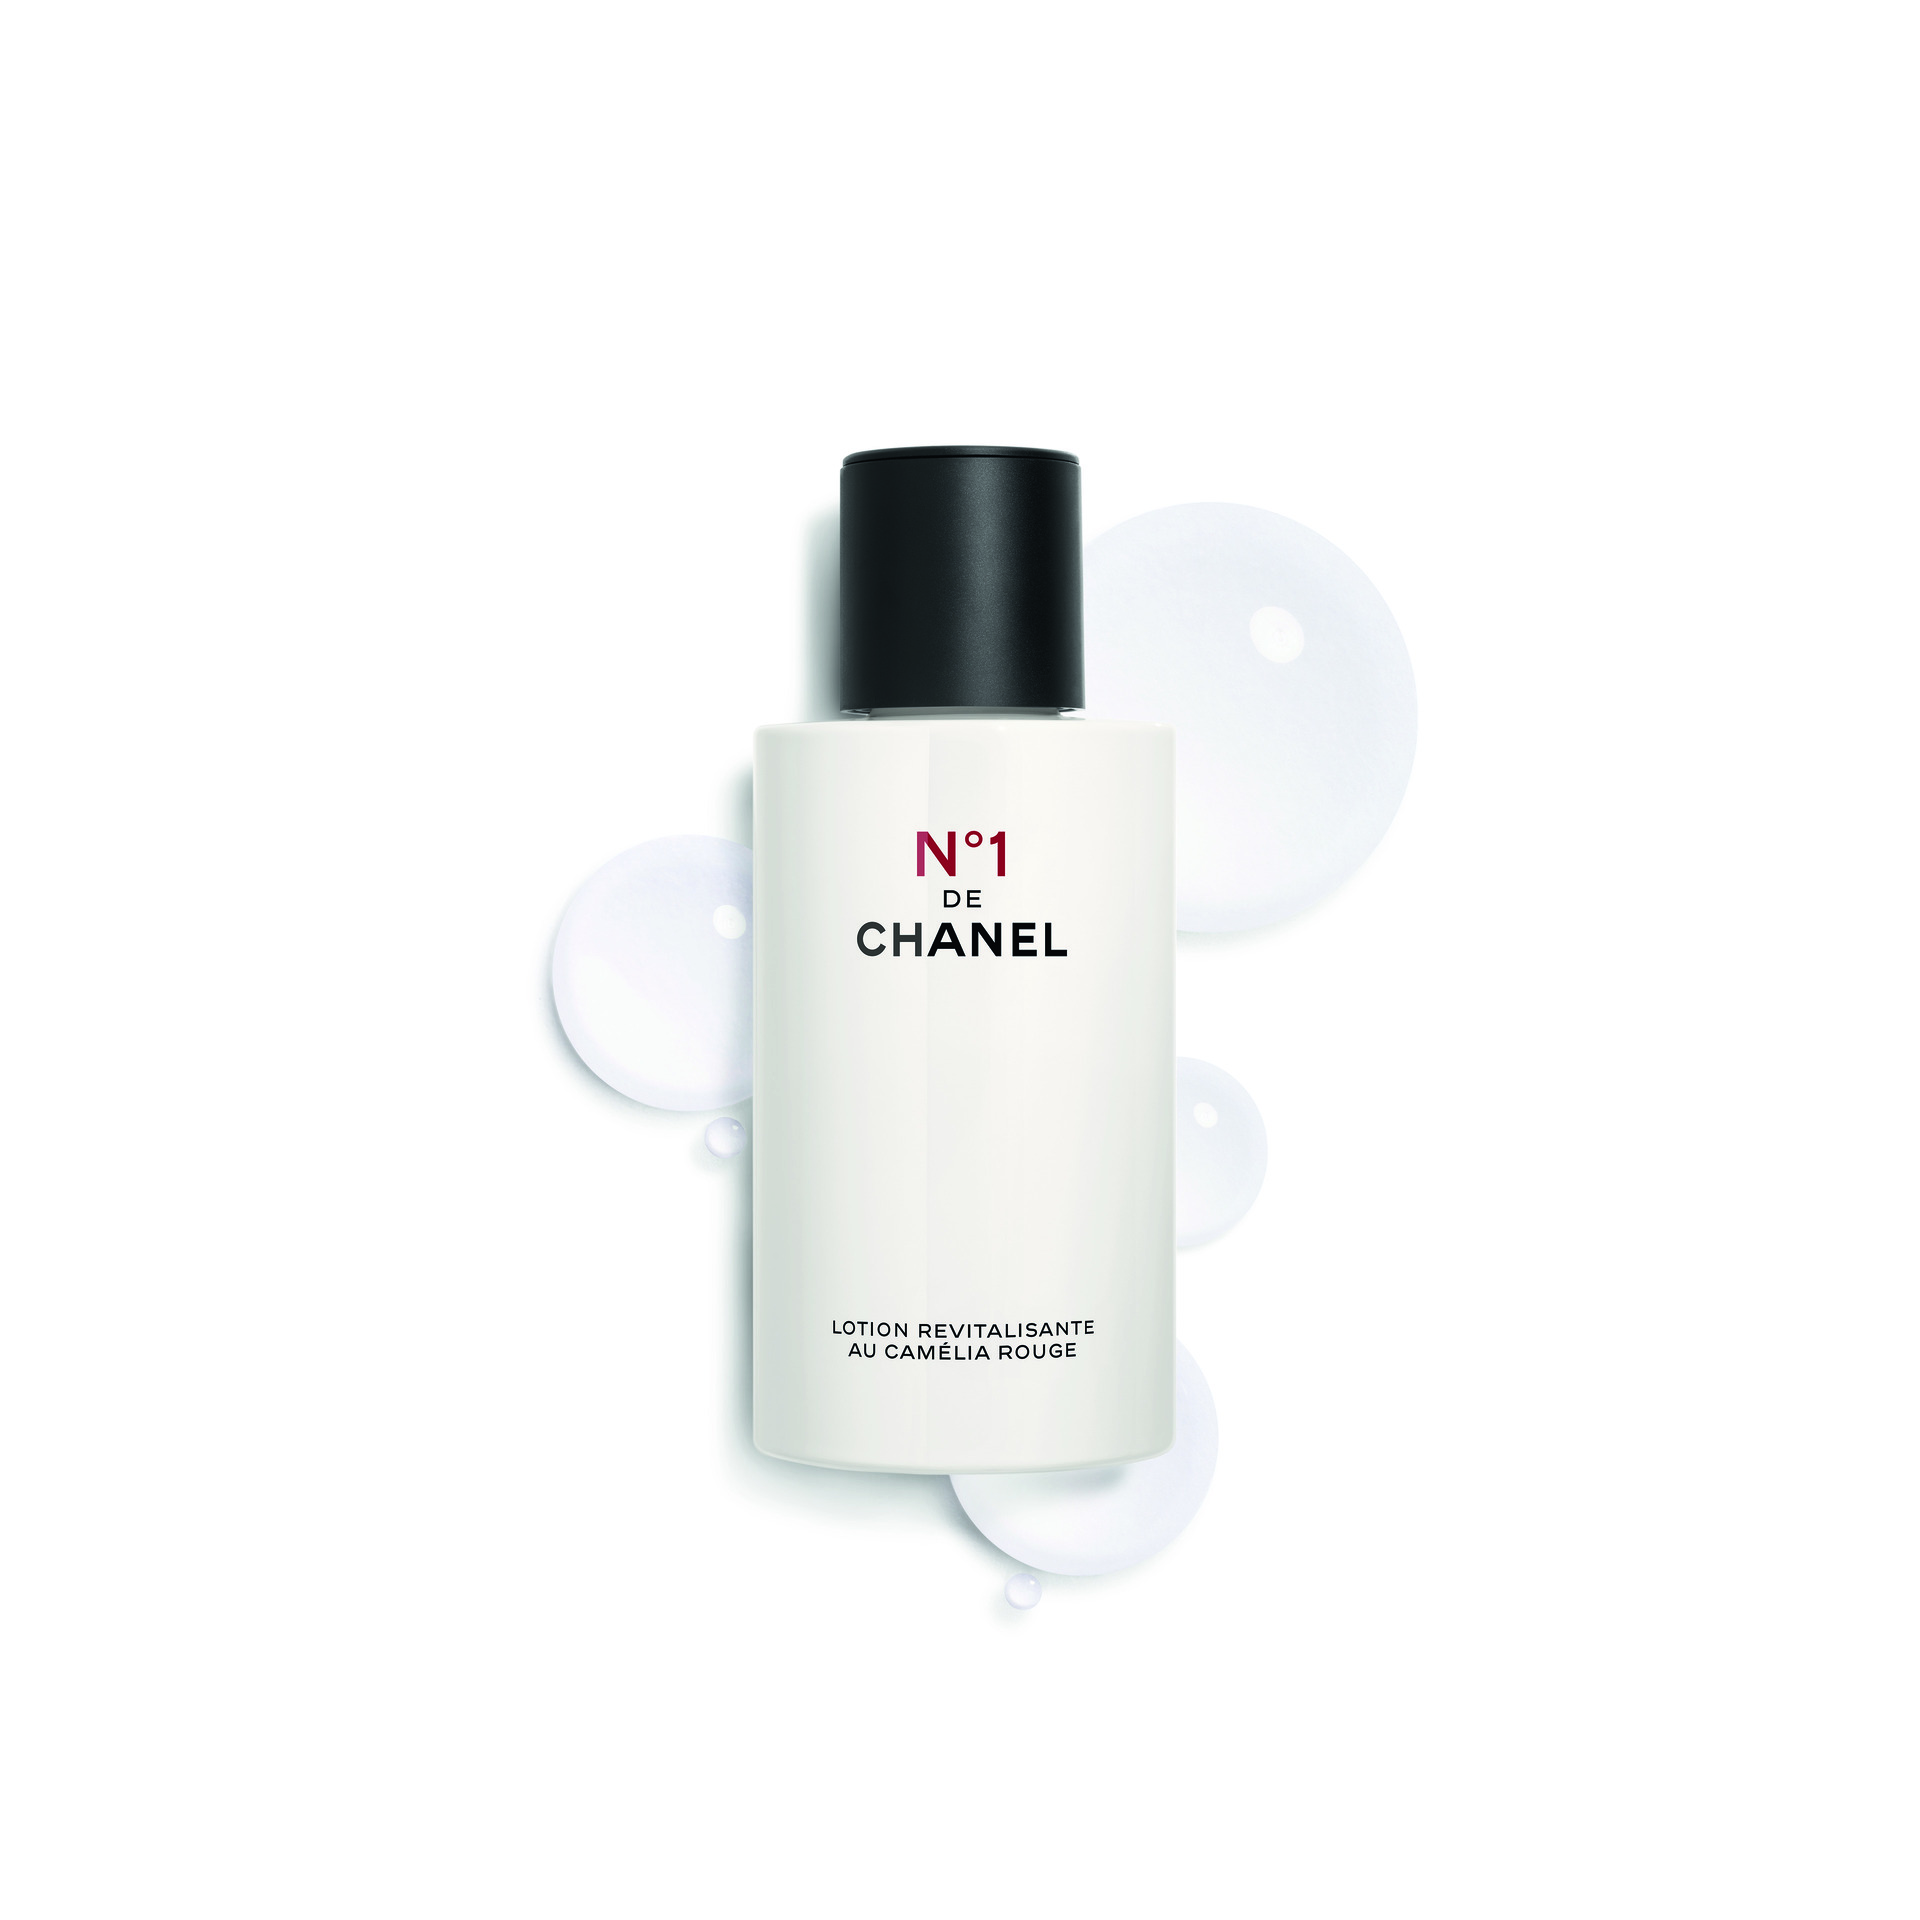 No1 de Chanel Foundation & Balm: the Perfect Skin Finish? - The